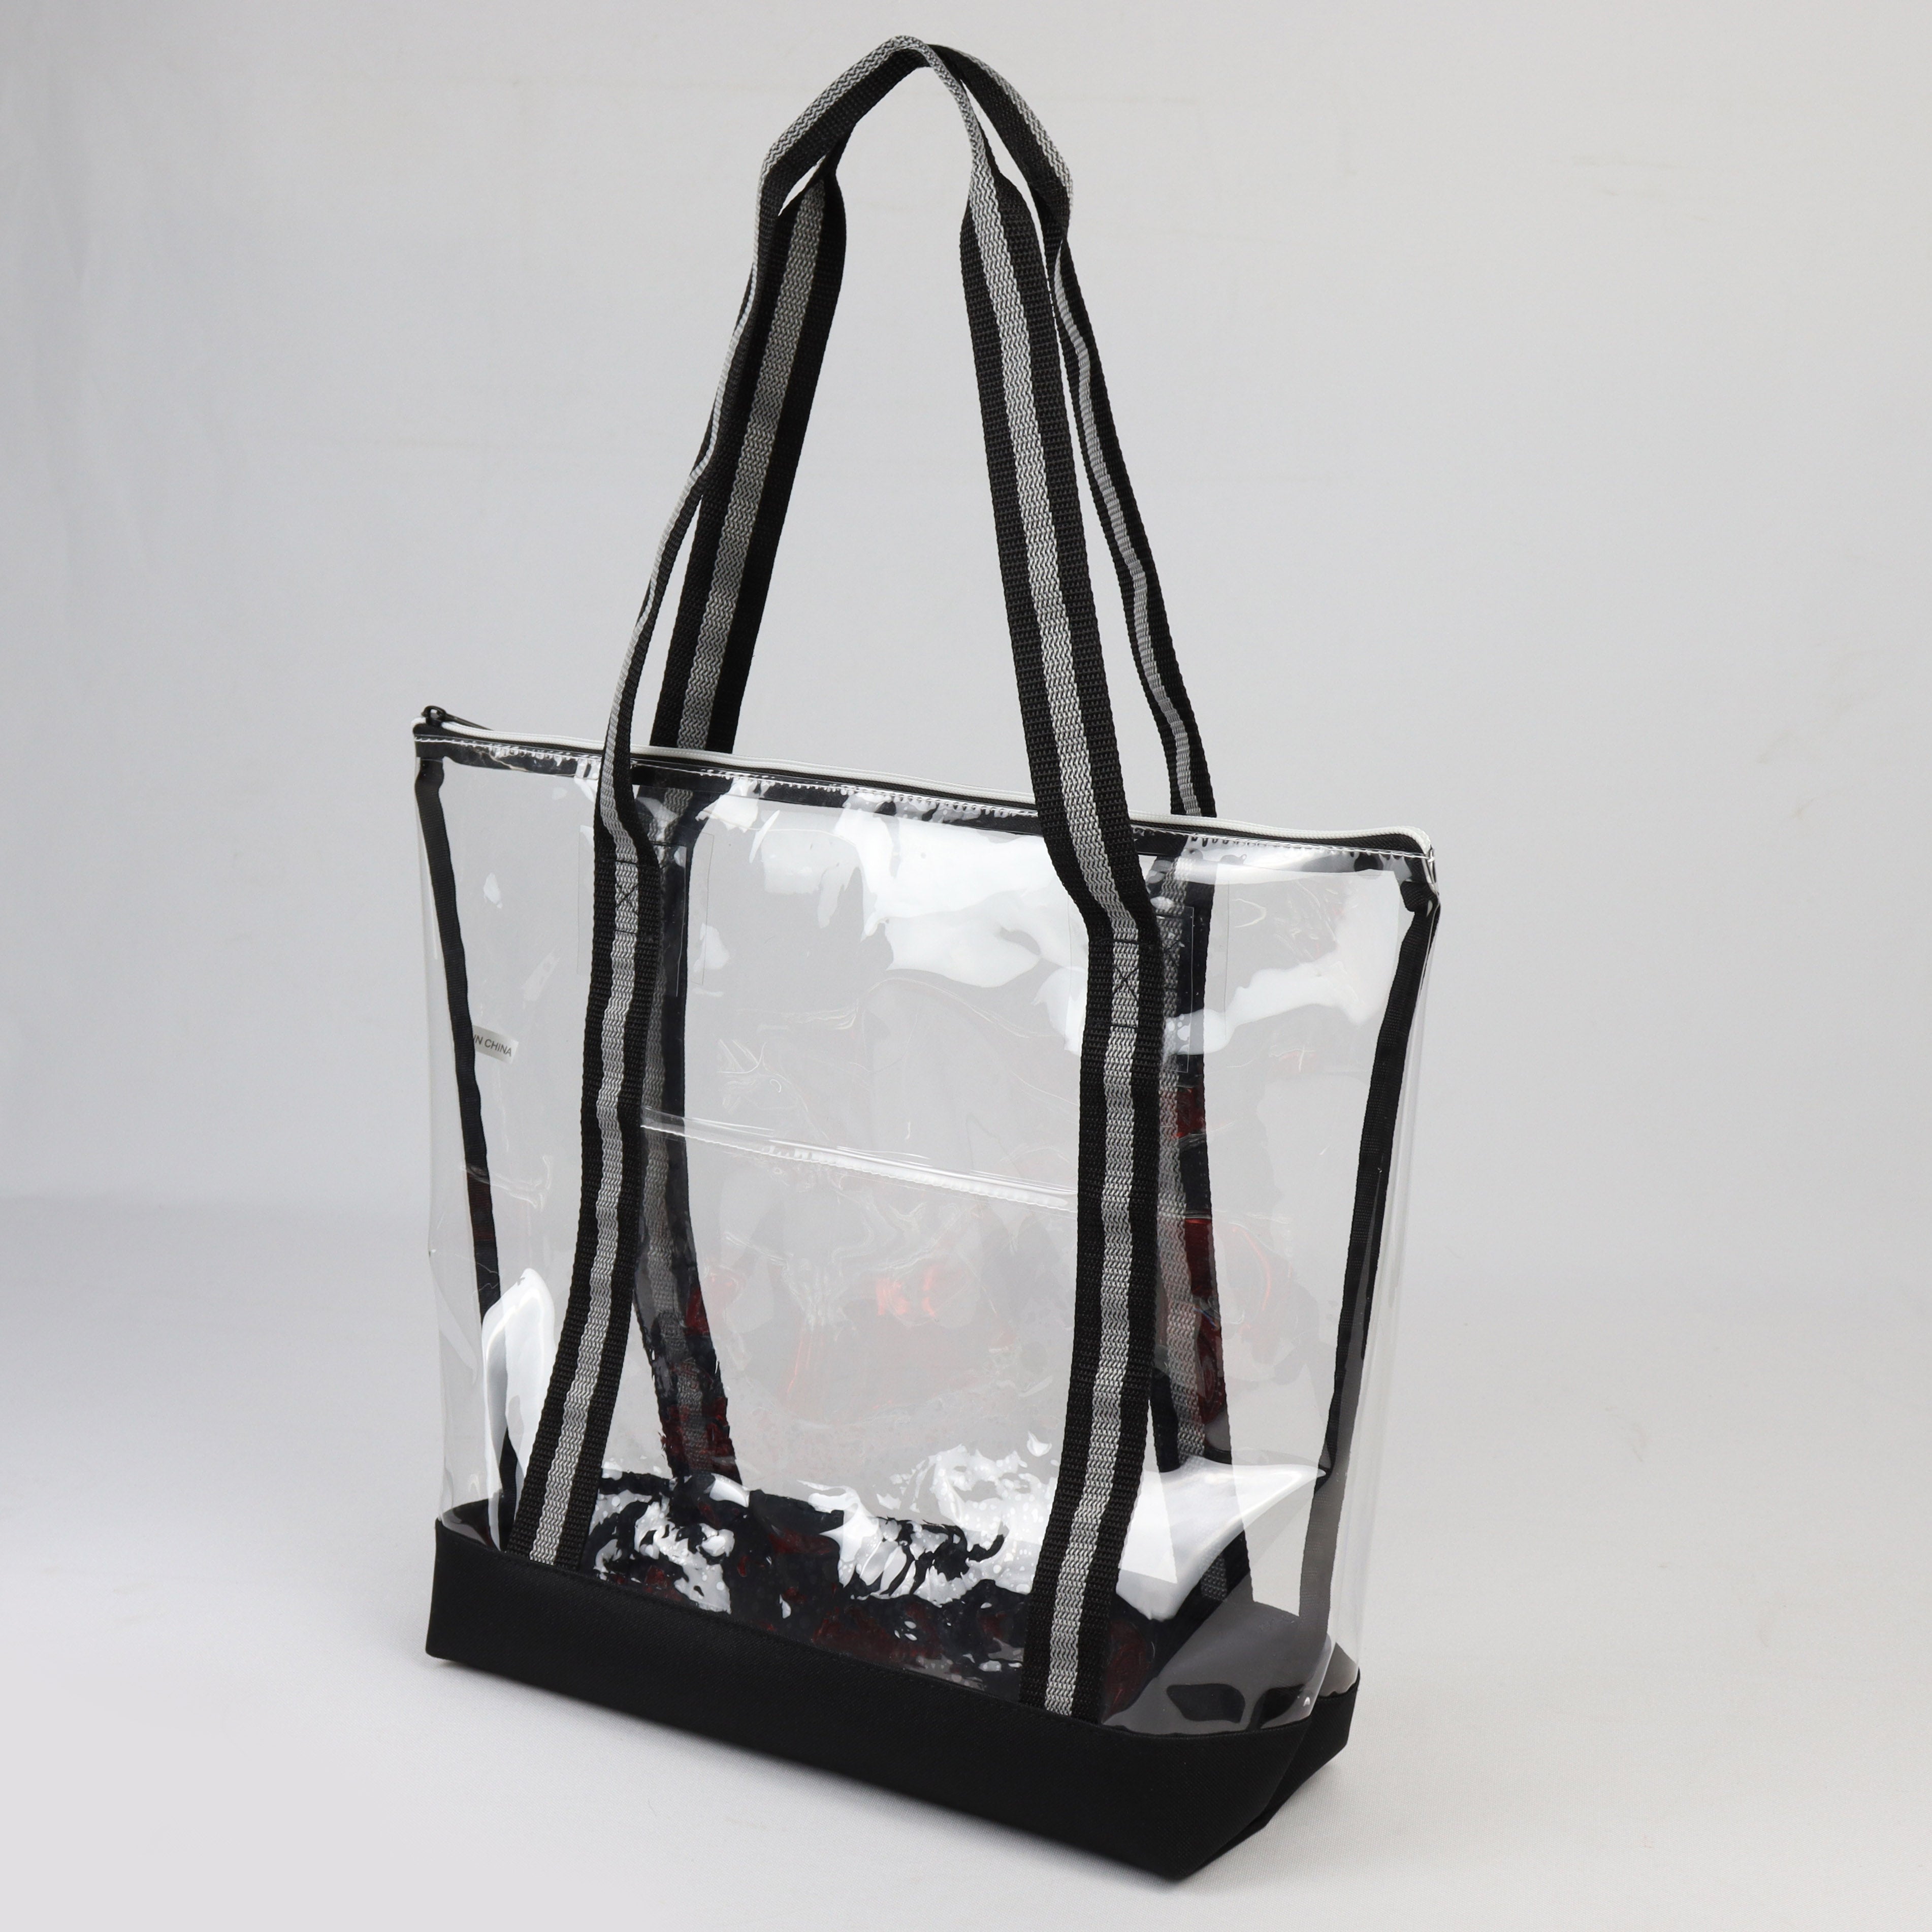 LS-TPU606 - Clear Tote Bag with Zipper